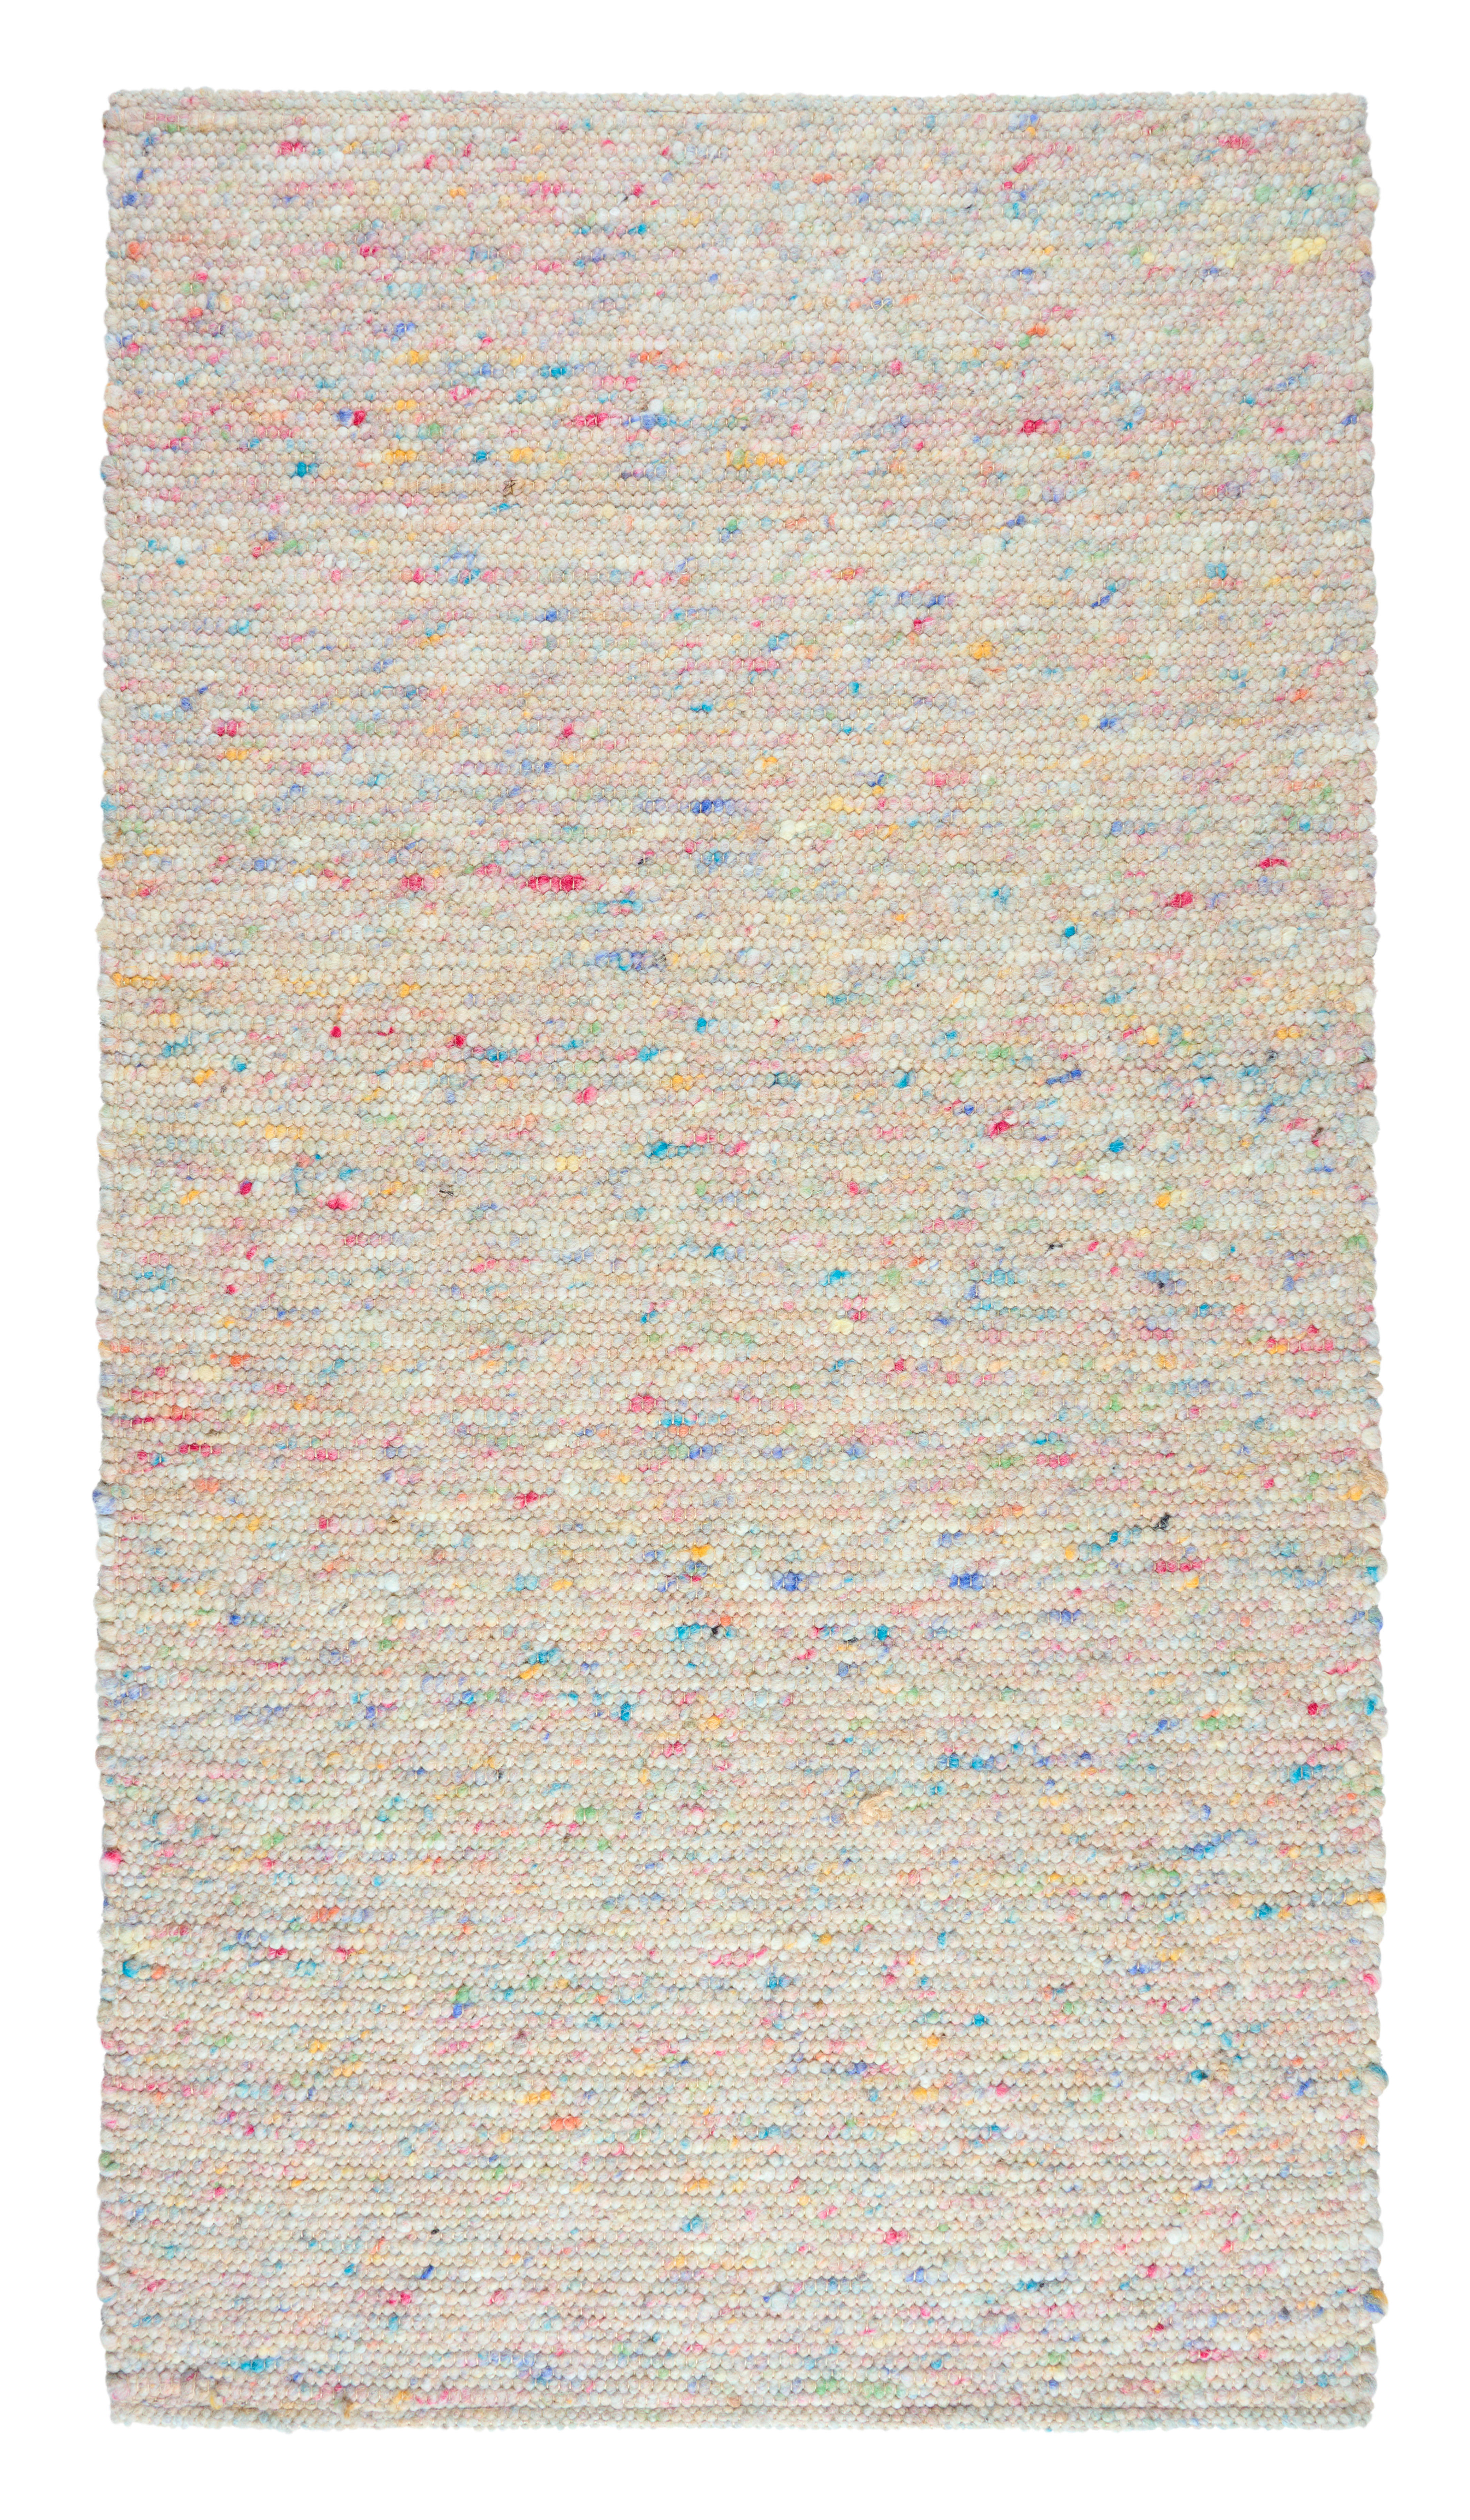 HANDWEBTEPPICH 60/110 cm Mondsee  - Multicolor, Natur, Textil (60/110cm) - Linea Natura